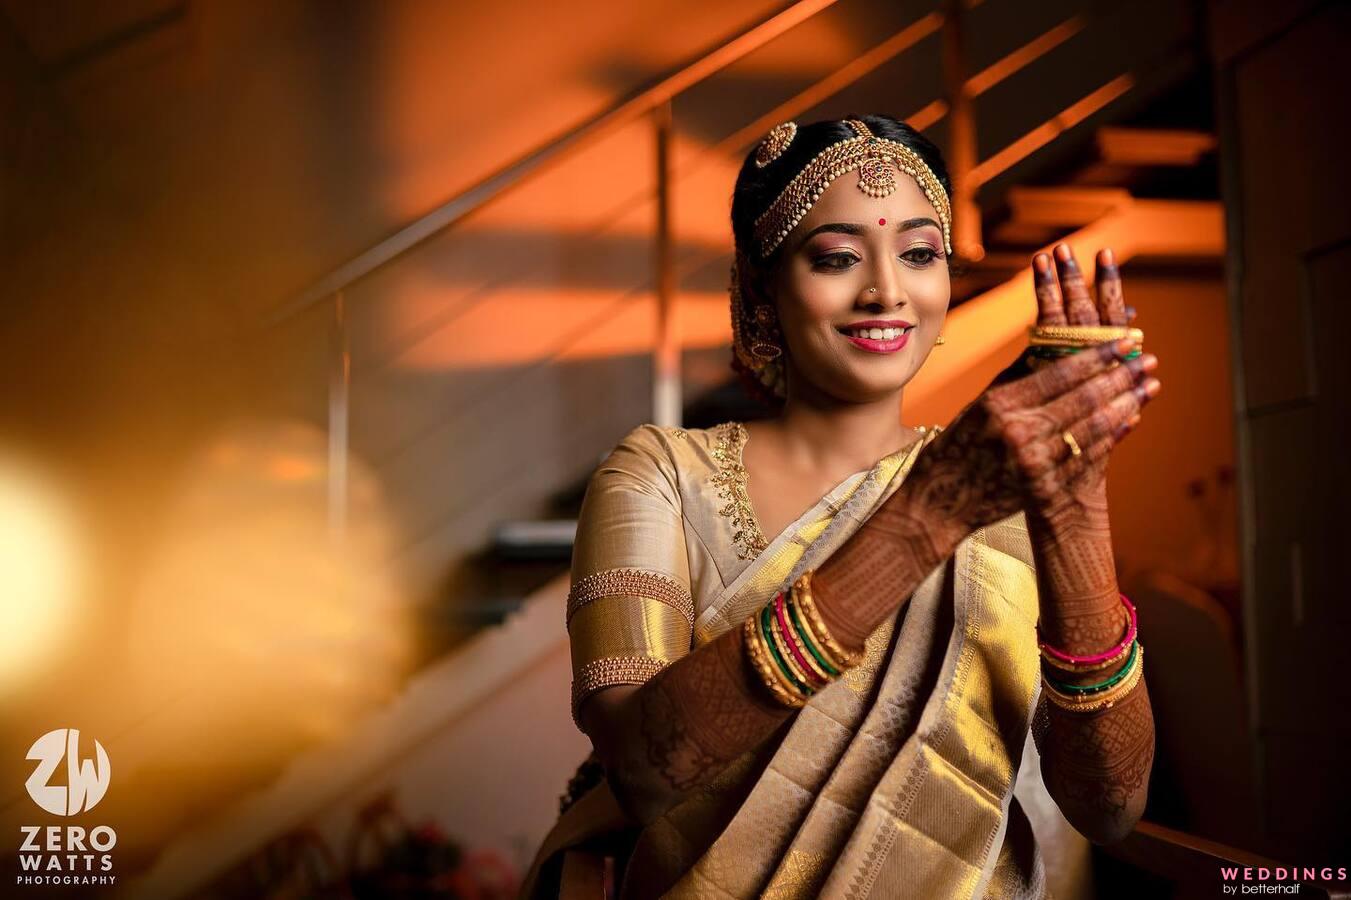 10 Must-have Breathtaking Kerala Wedding Photos for the Wedding Album